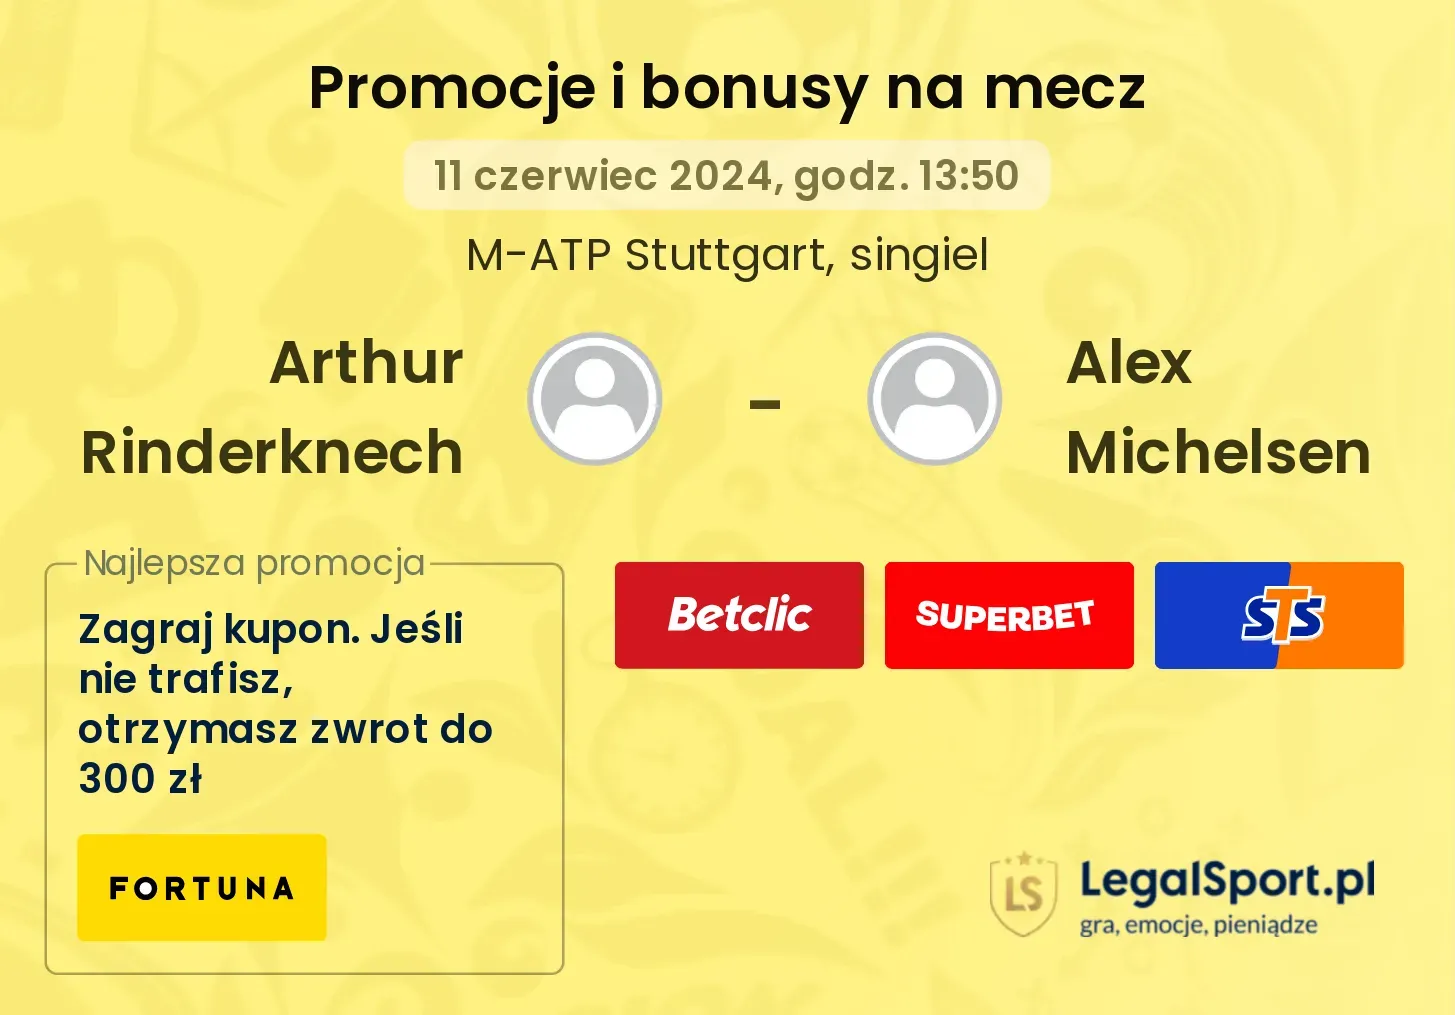 Arthur Rinderknech - Alex Michelsen promocje bonusy na mecz